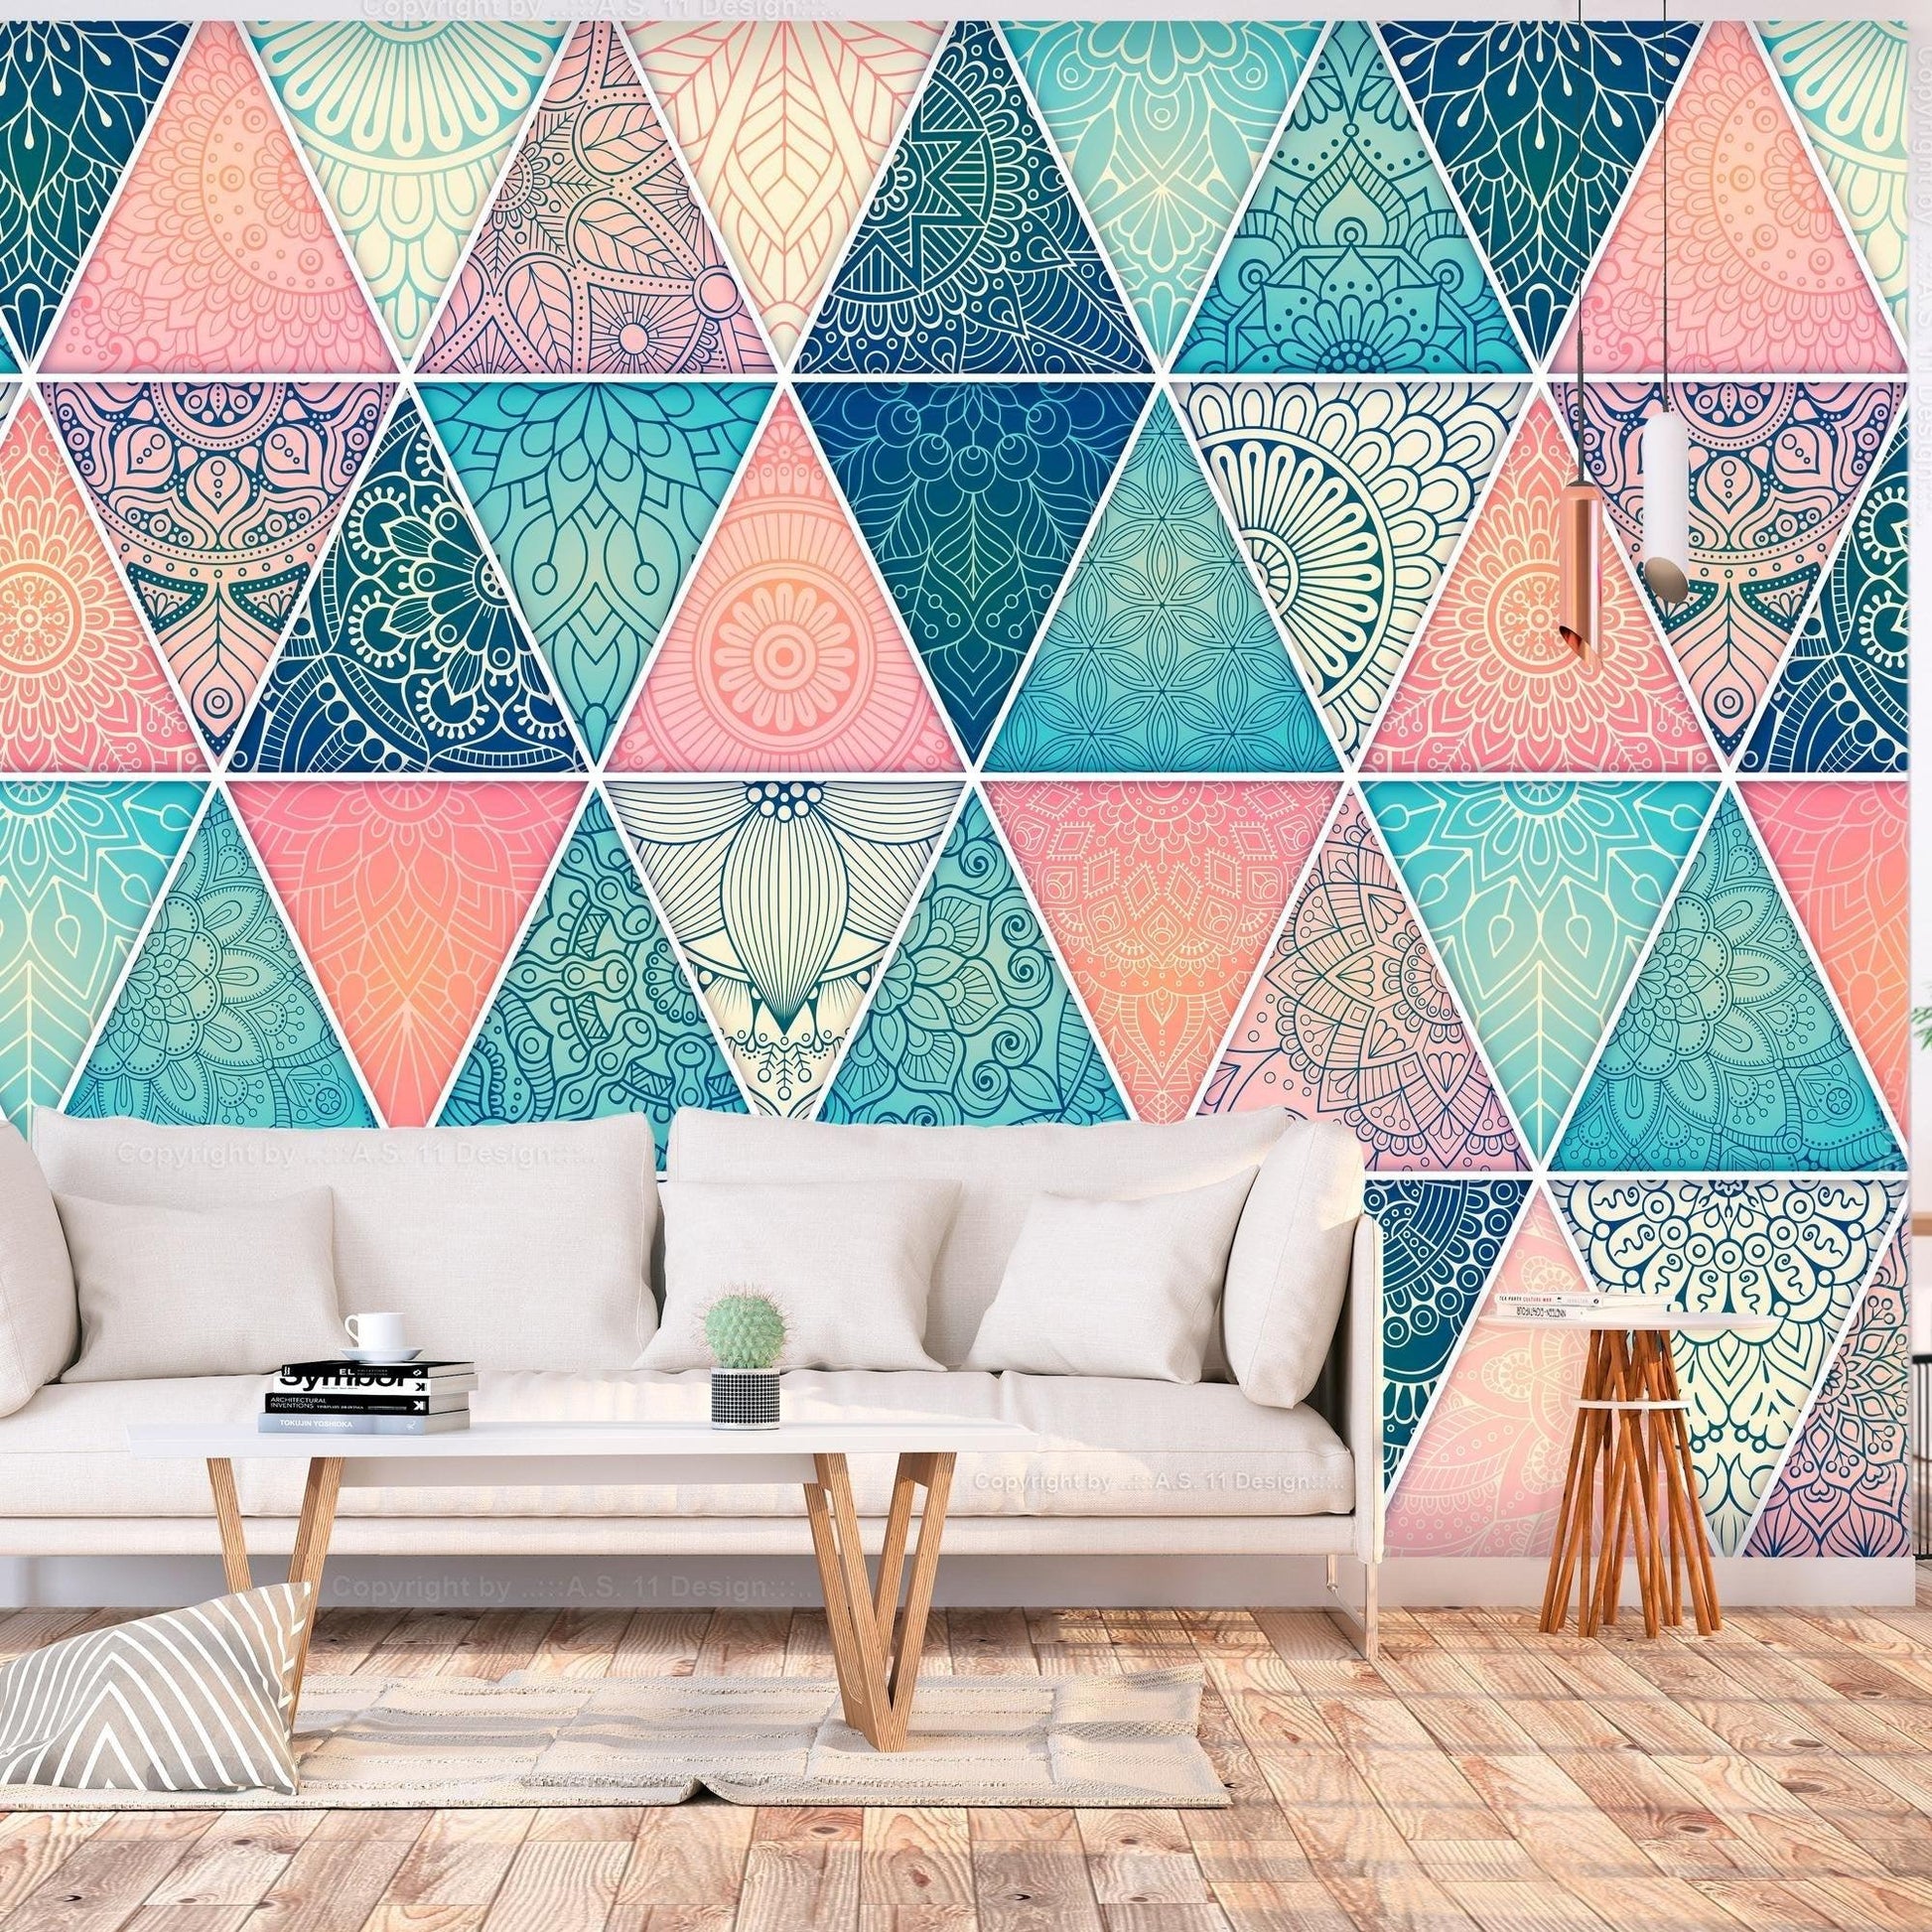 Peel and stick wall mural - Oriental Triangles - www.trendingbestsellers.com